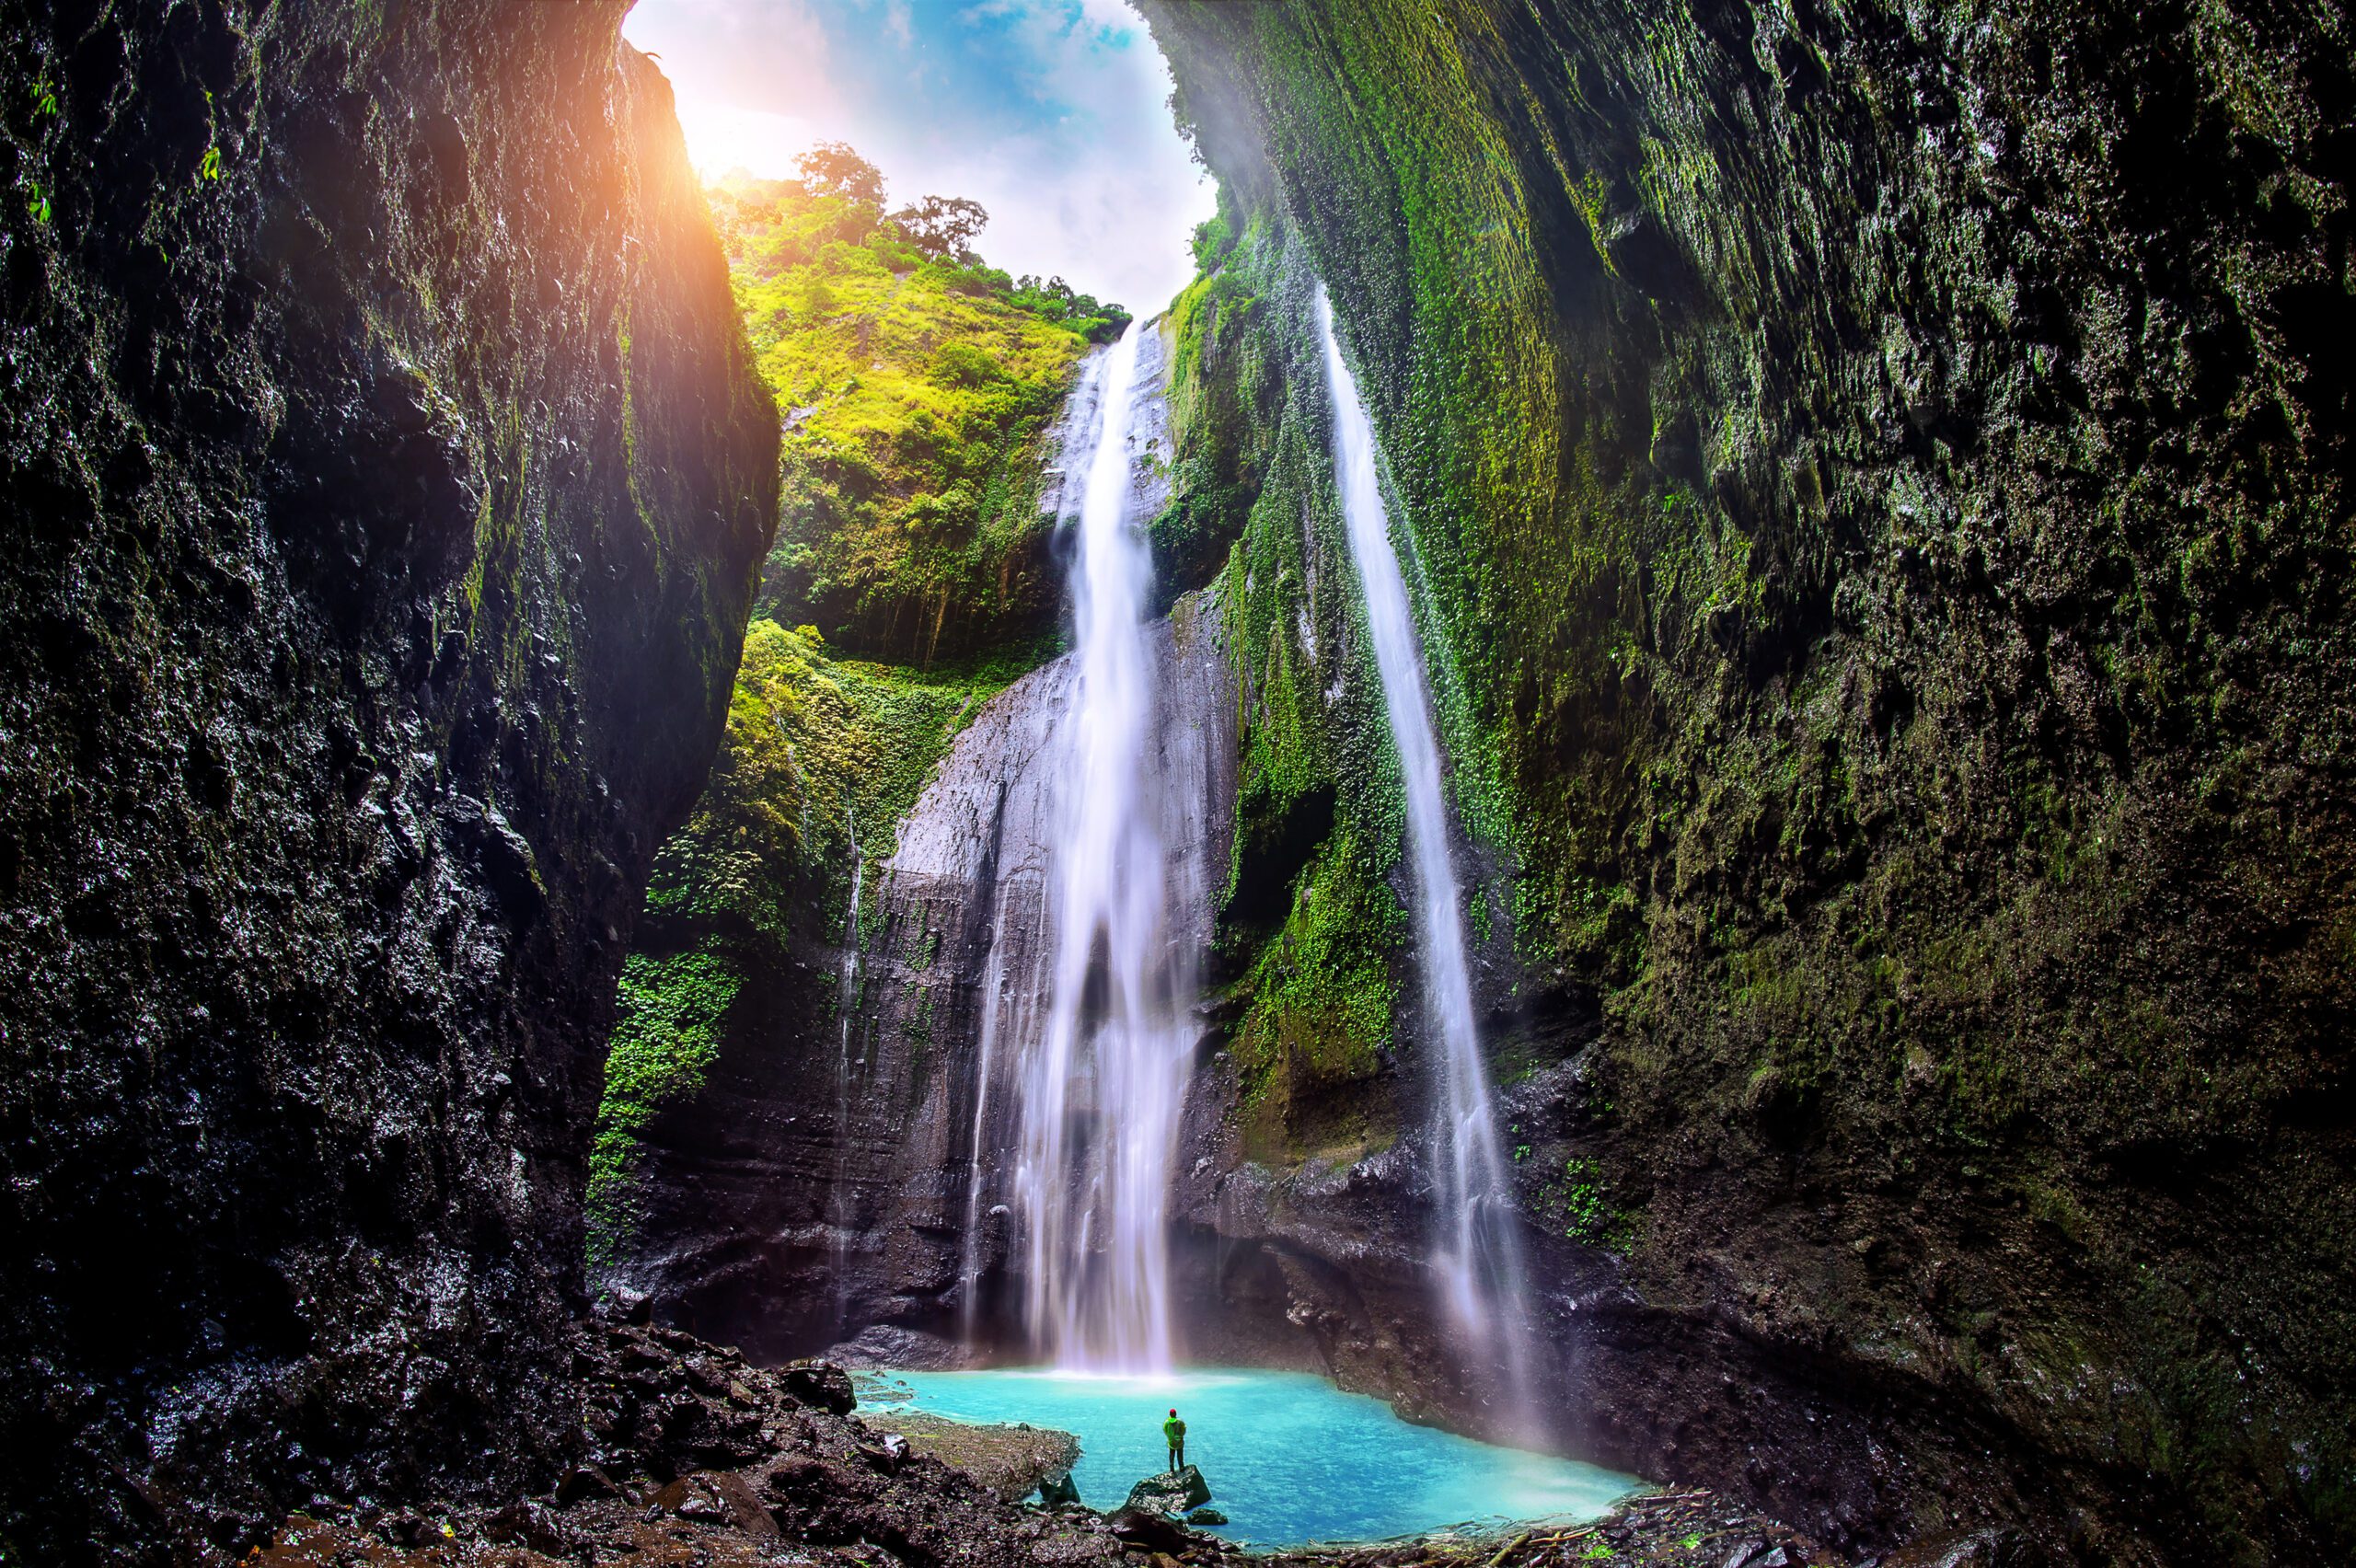 Madakaripura Waterfall is the tallest waterfall in Java and the